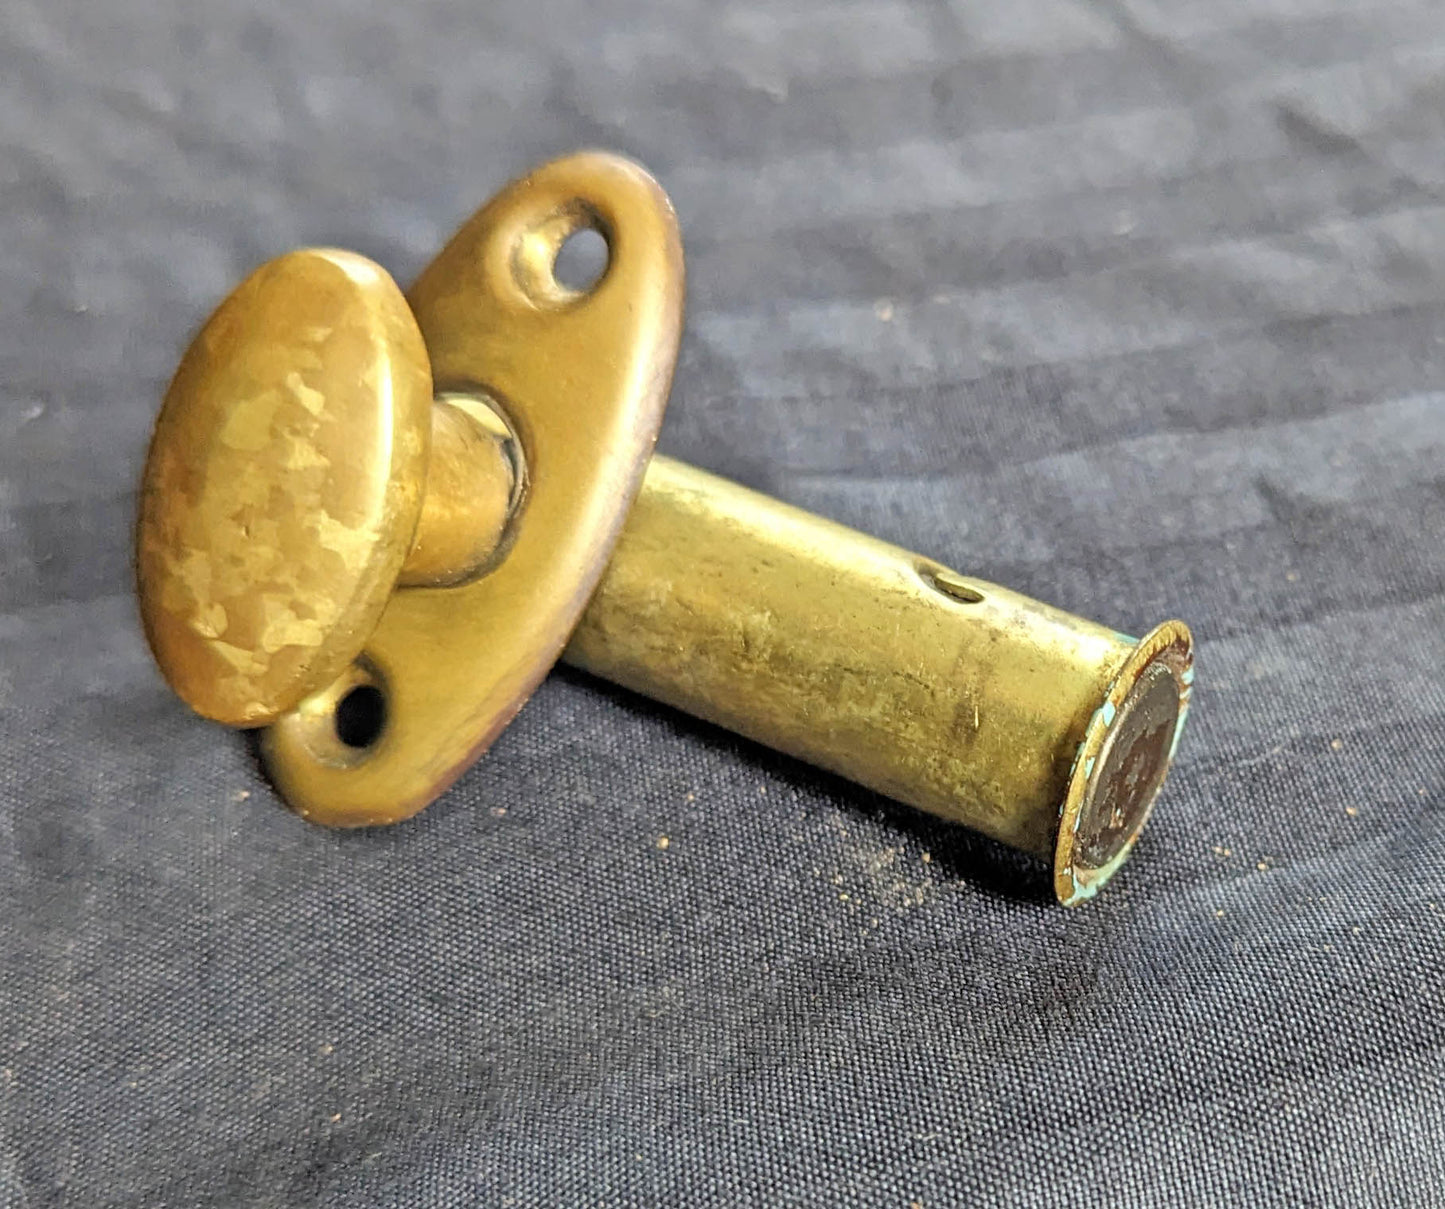 2 available Antique Vintage Old Salvaged Reclaimed Brass Steel Metal Door Privacy Mortise Lock Lockset Bolt Barrel Tube Cylinder Latch Set